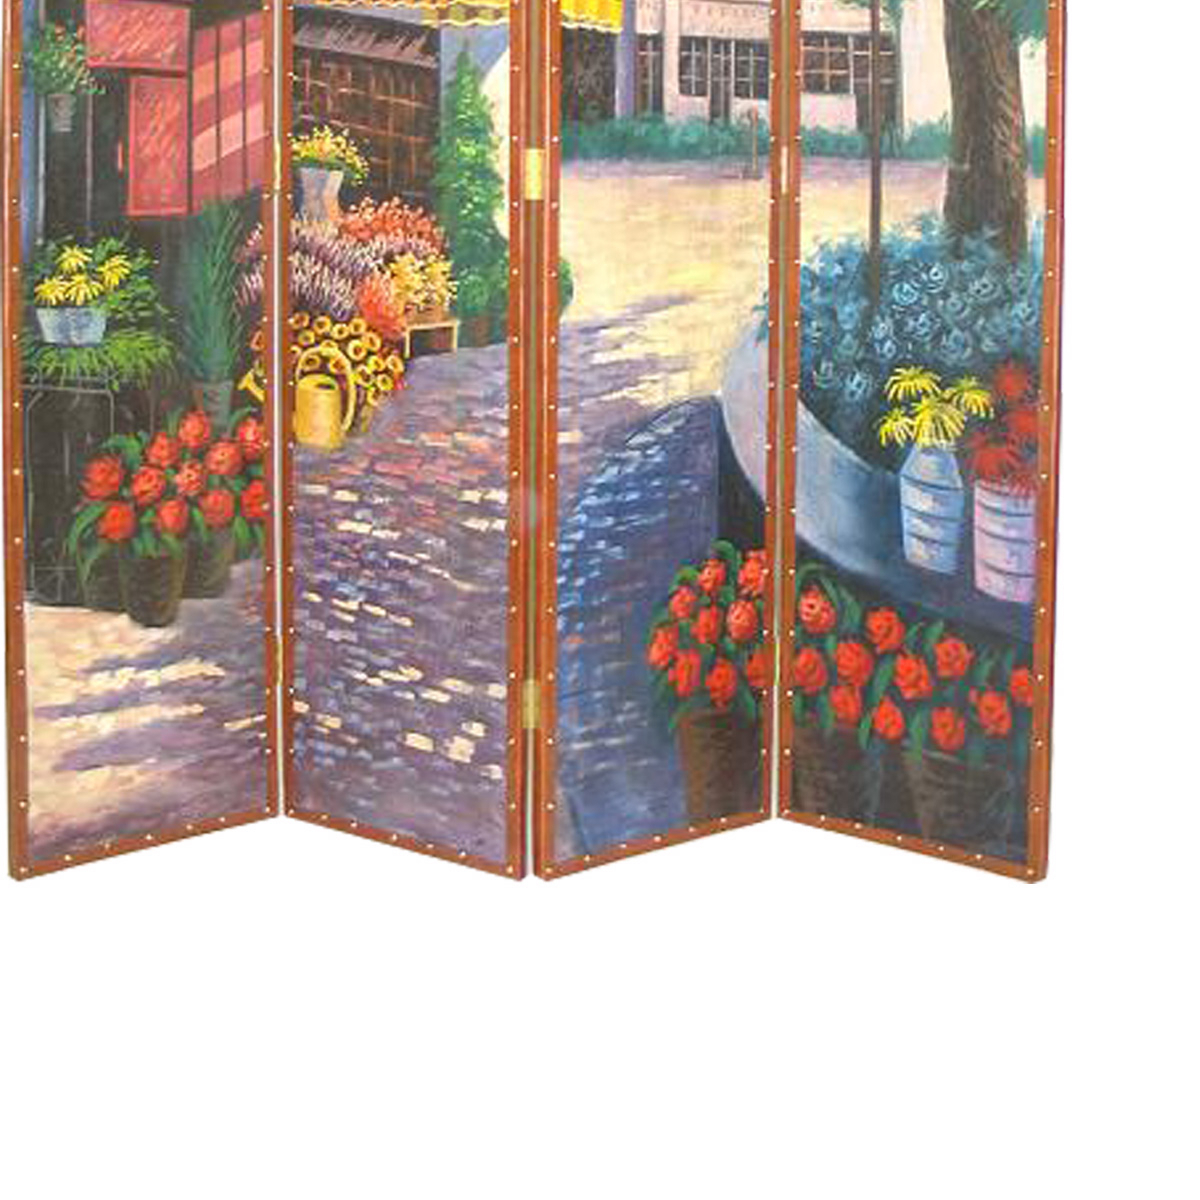 Leatherette Wooden 4 Panel Room Divider With Flower Market Theme,Multicolor- Saltoro Sherpi